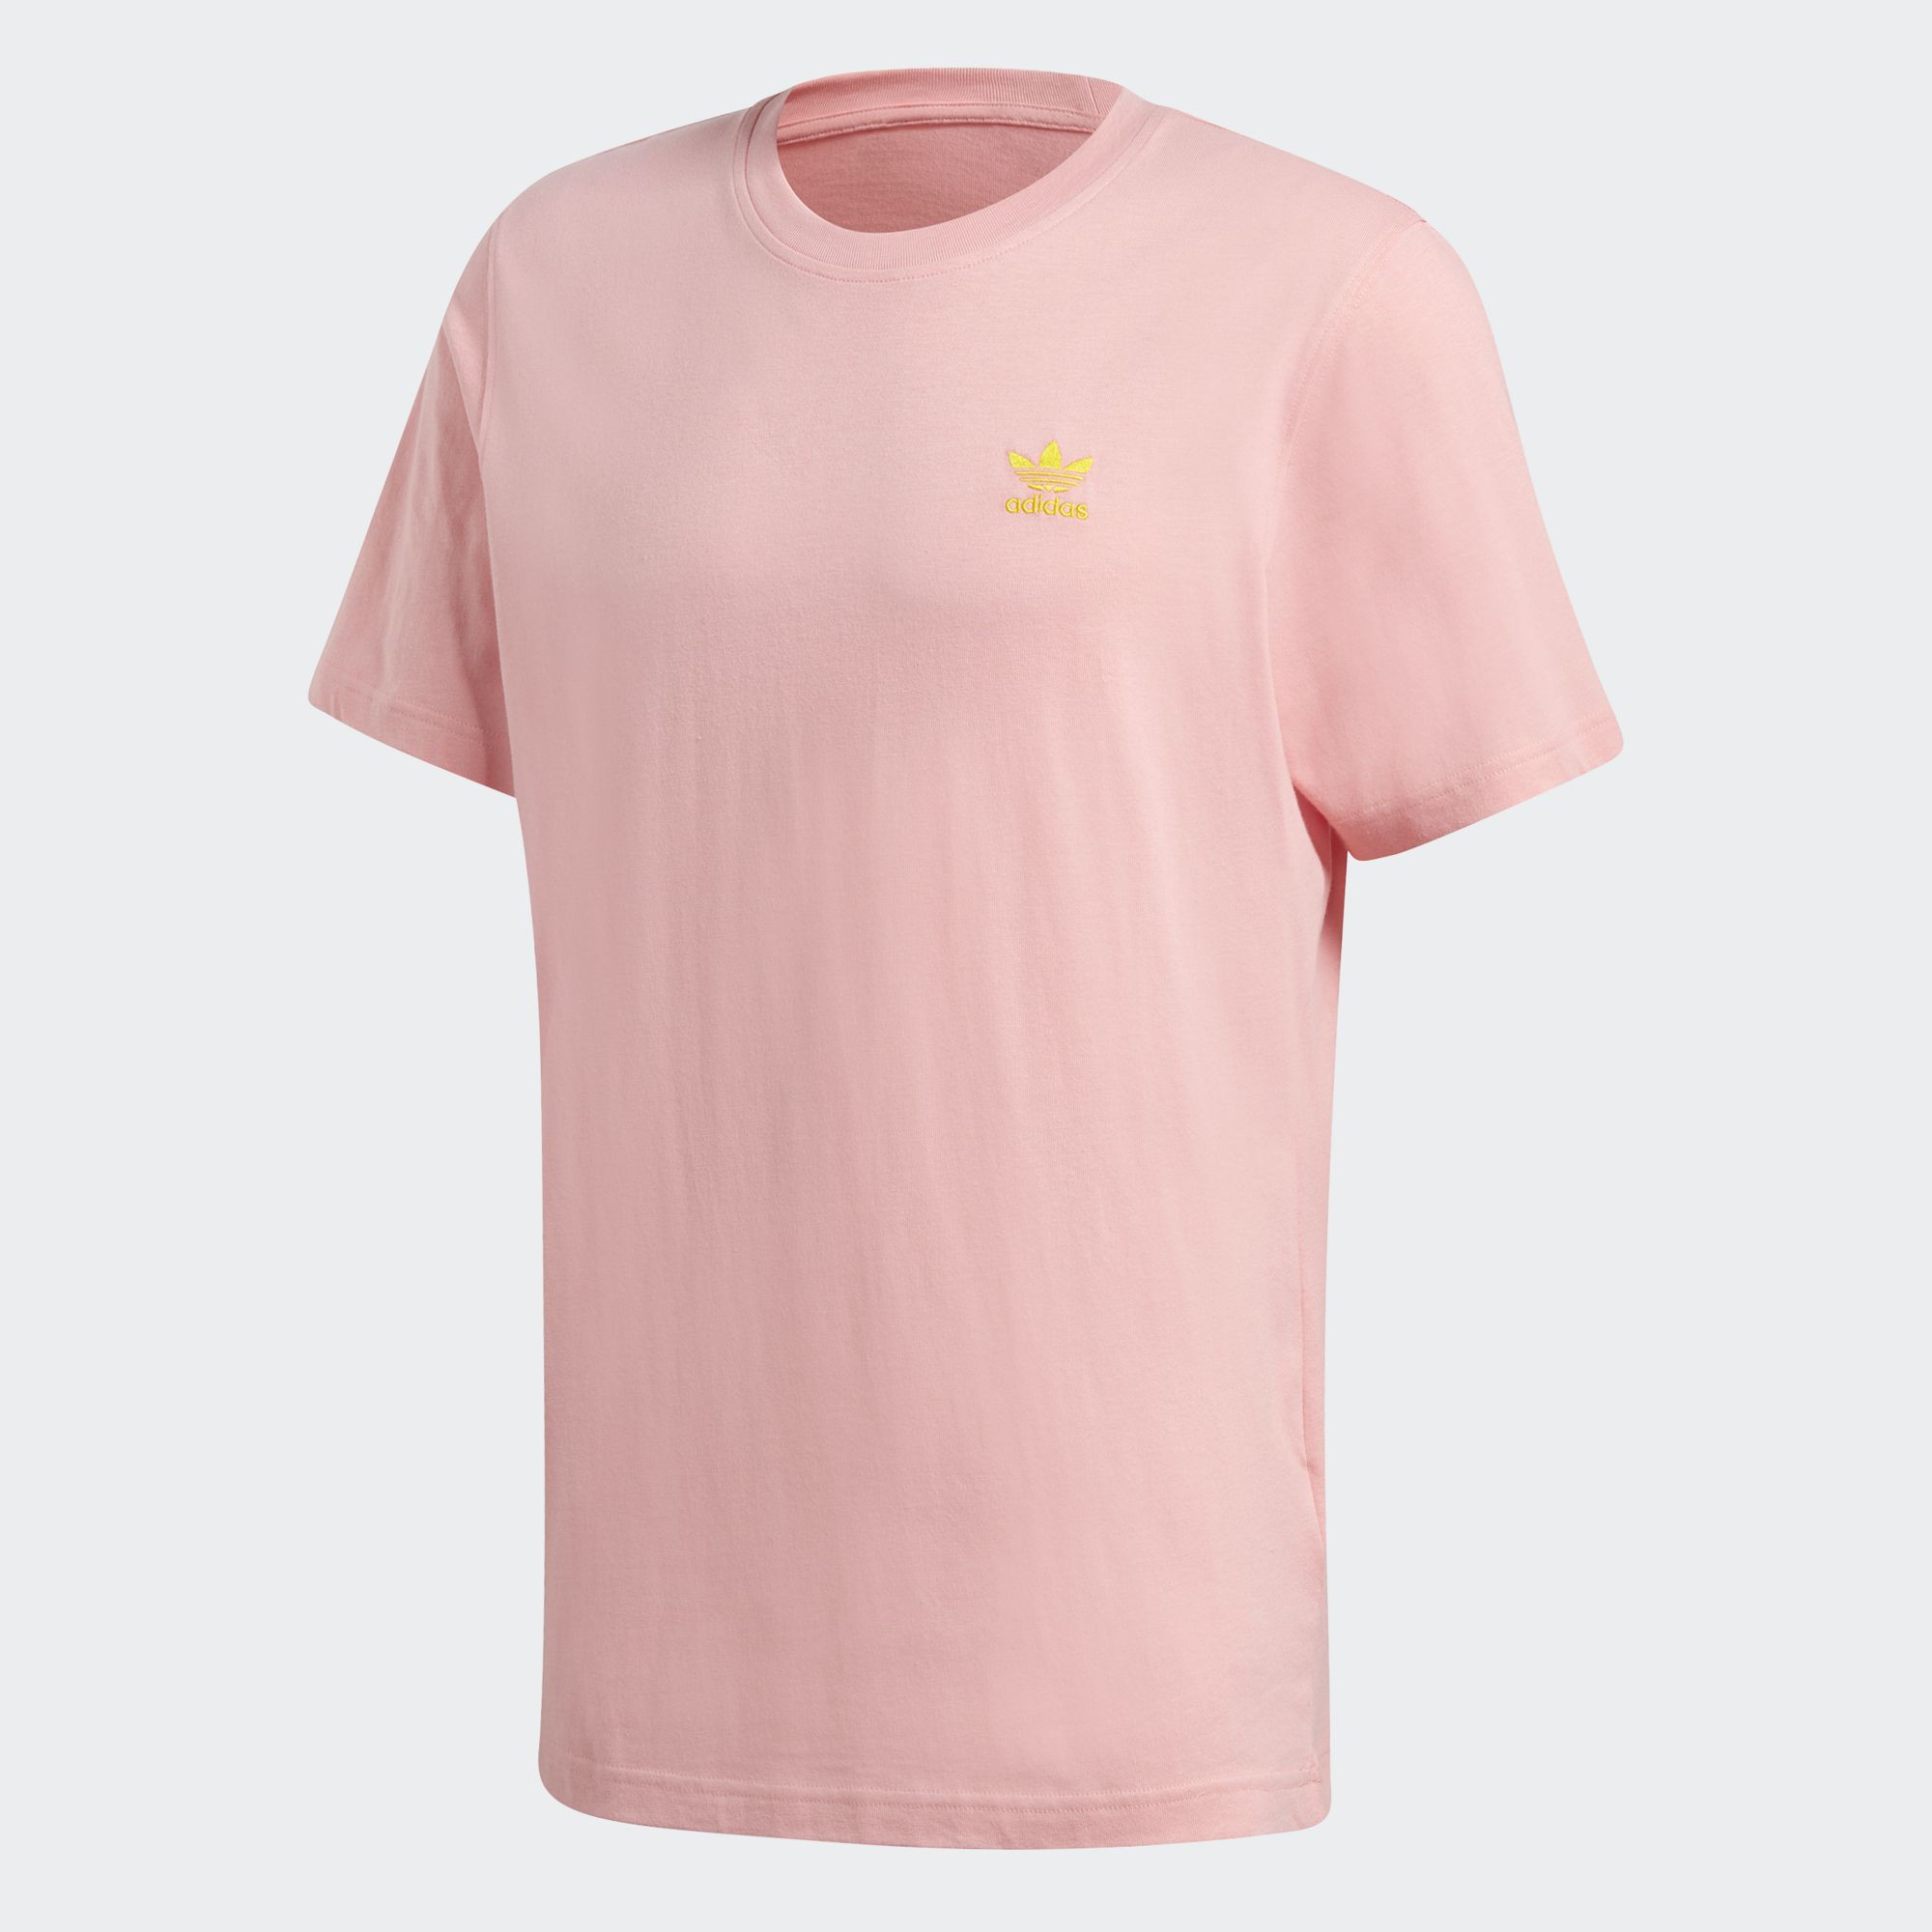 mens pink adidas originals t shirt